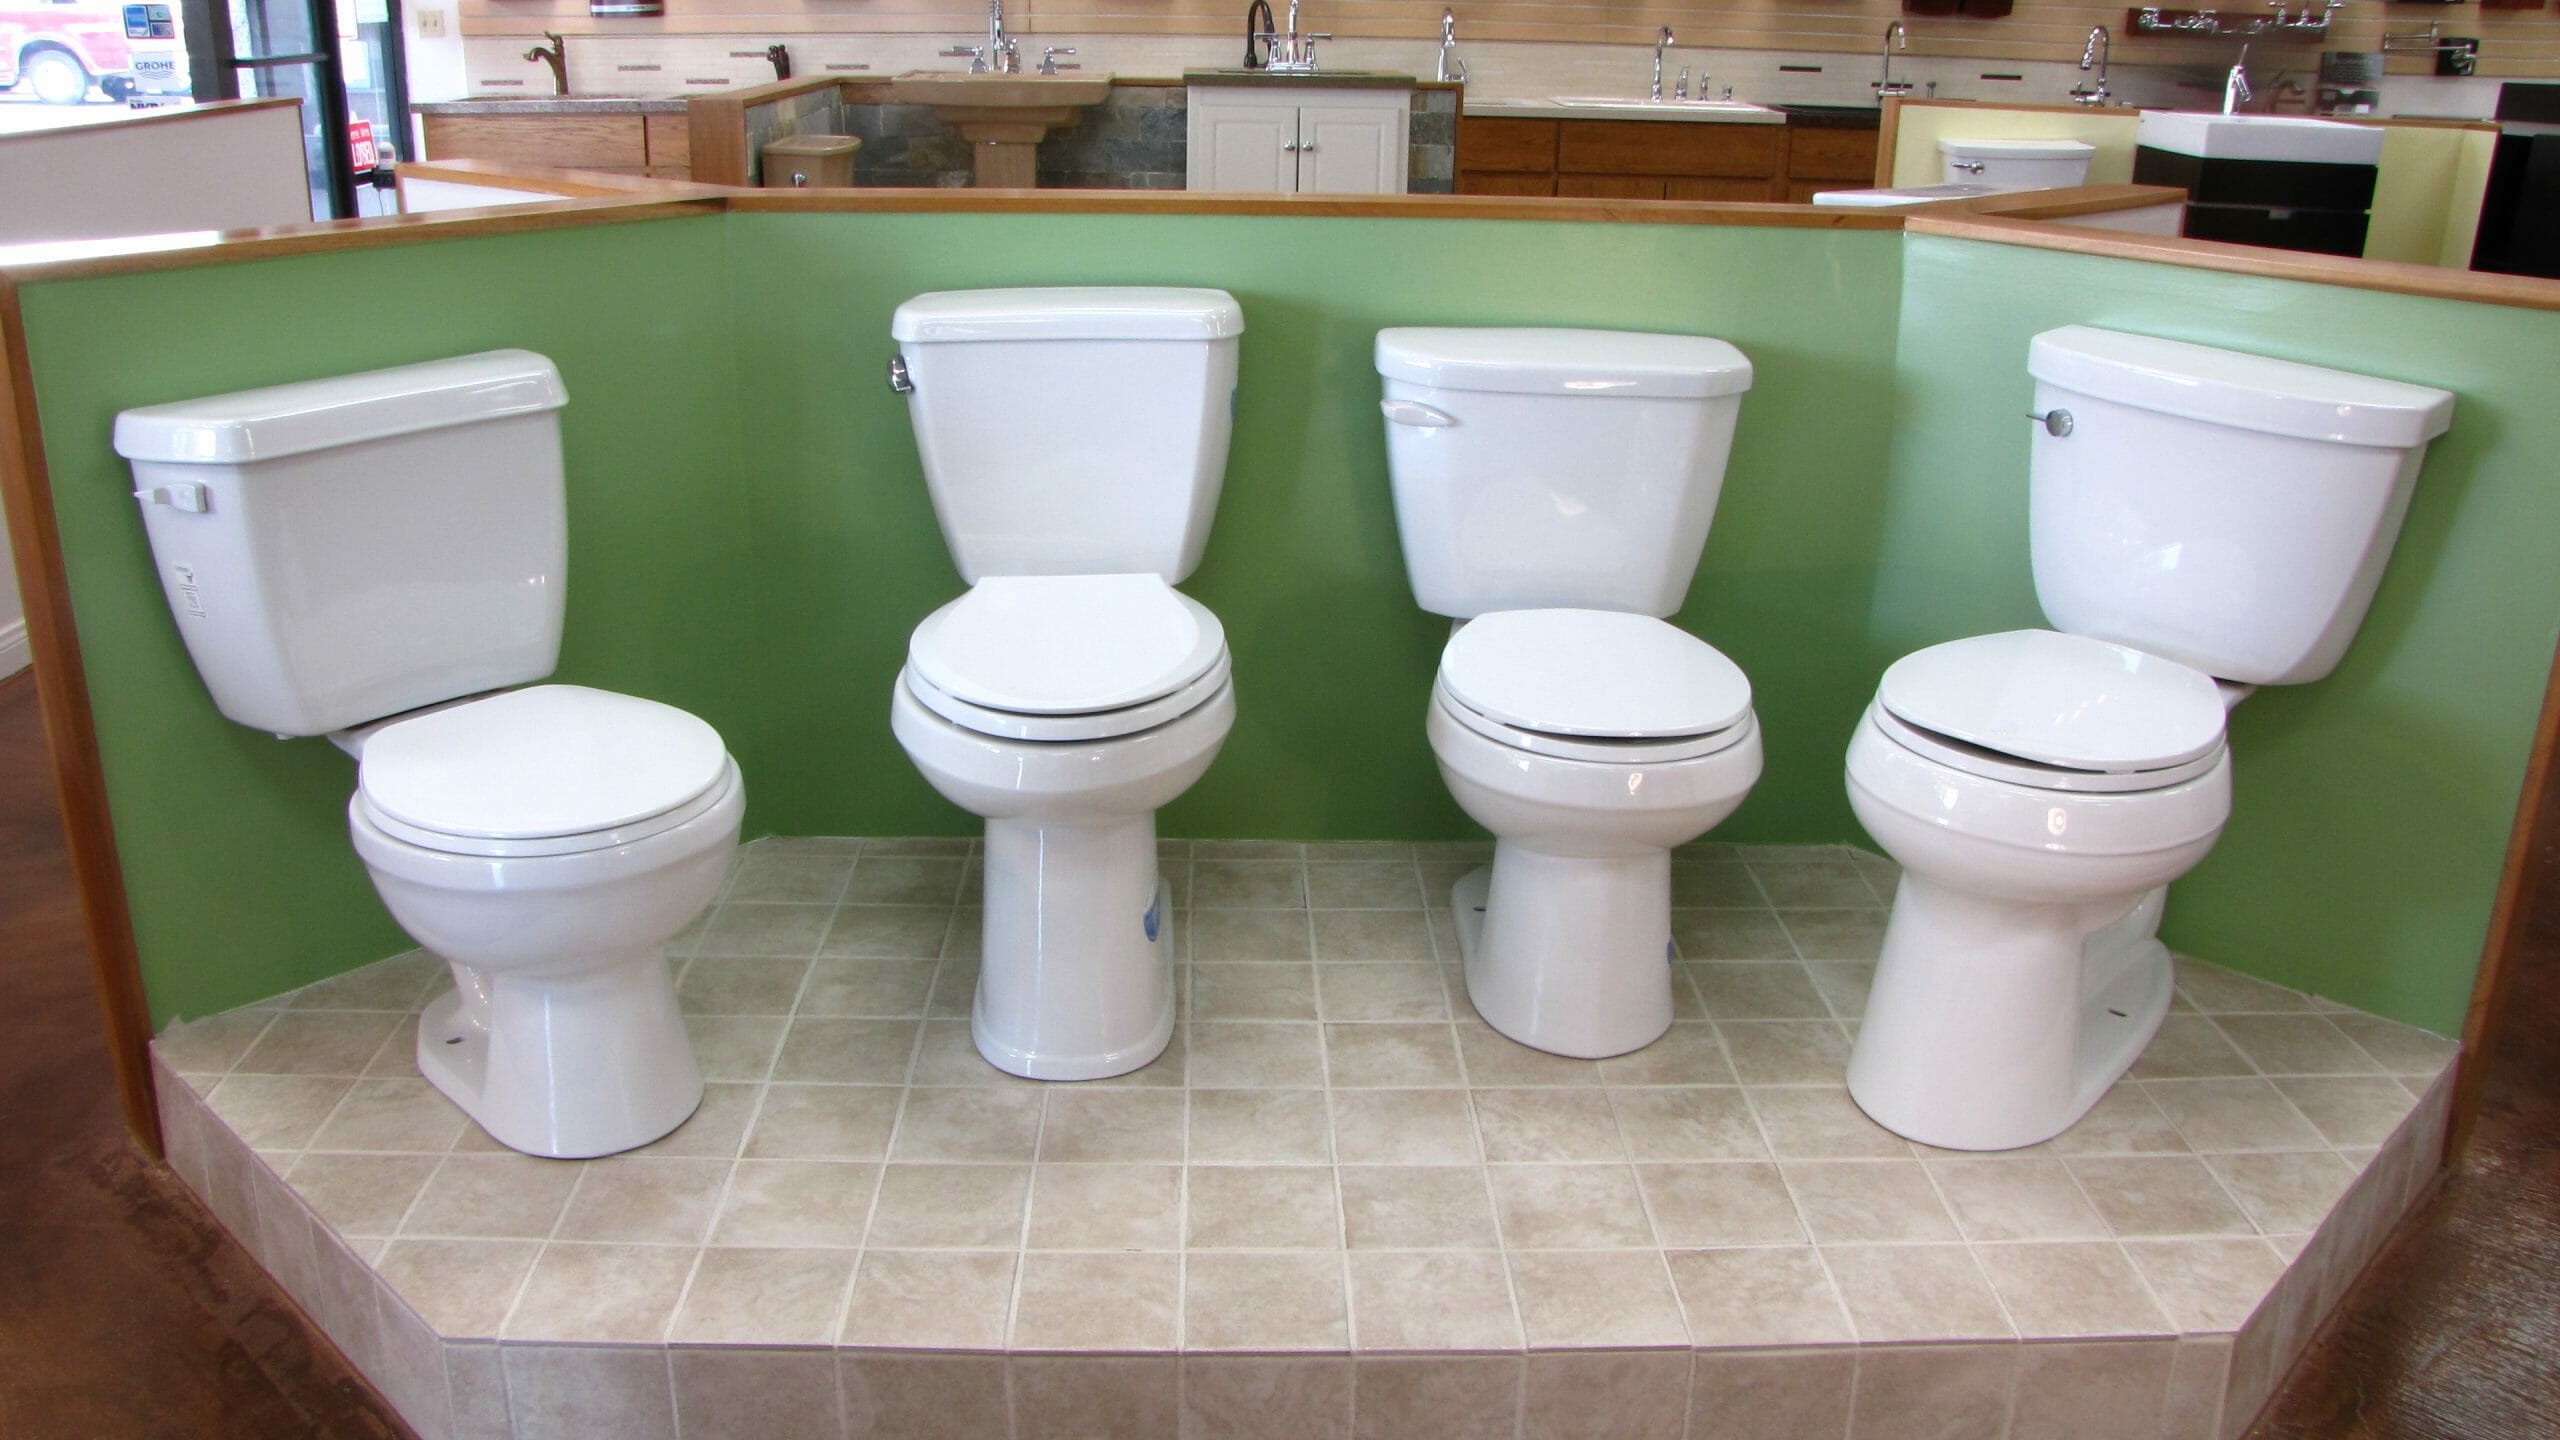 Toilets in our plumbing showroom